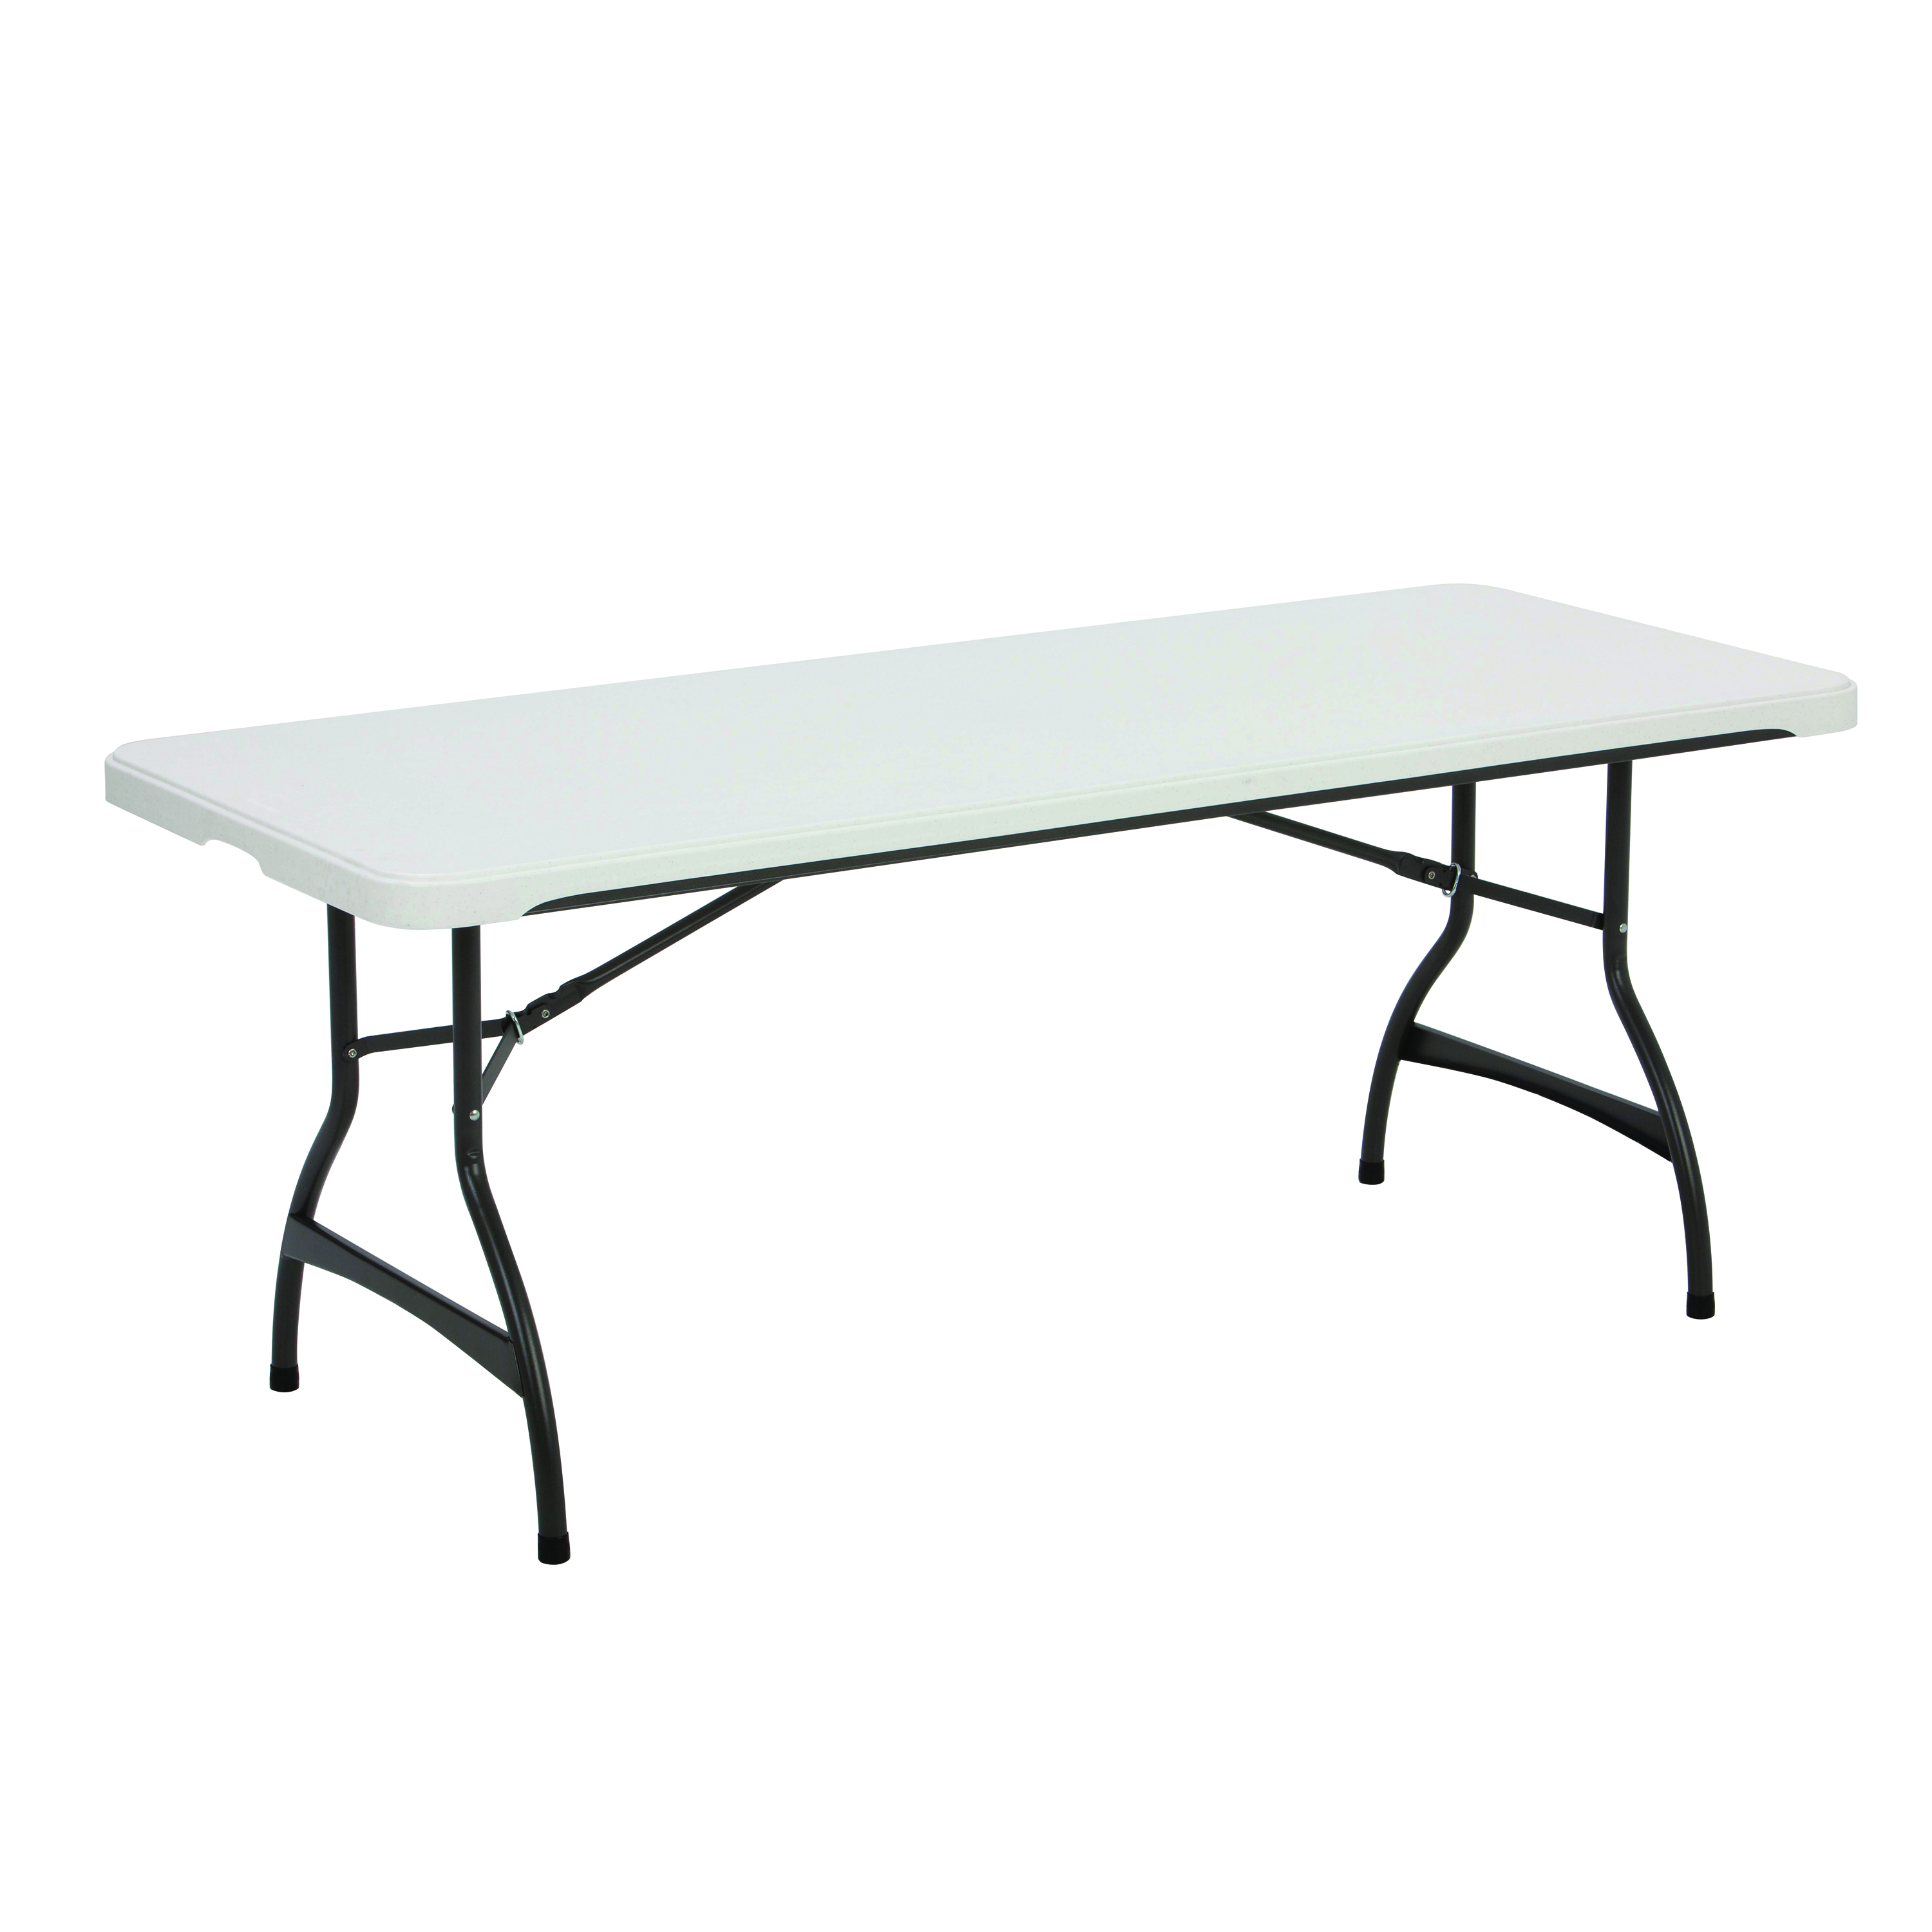 Rectangular table 183cm 80272